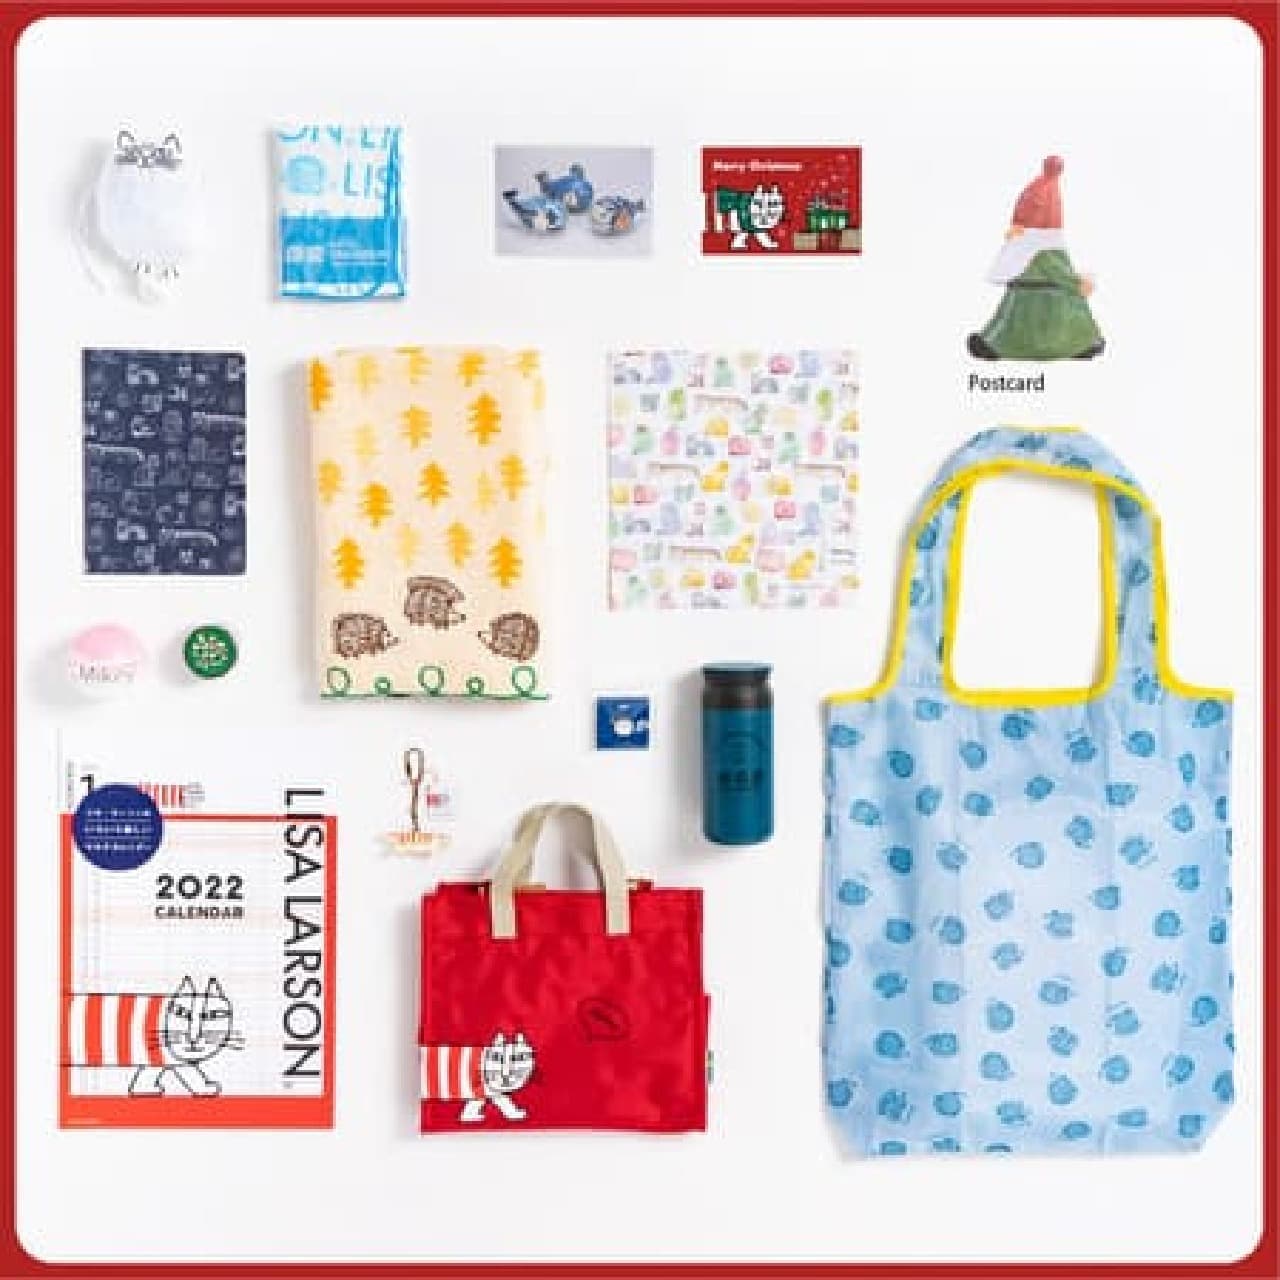 Lisa Larson lucky bag at Tonkachi store --Assorted popular items! 2022 calendar too